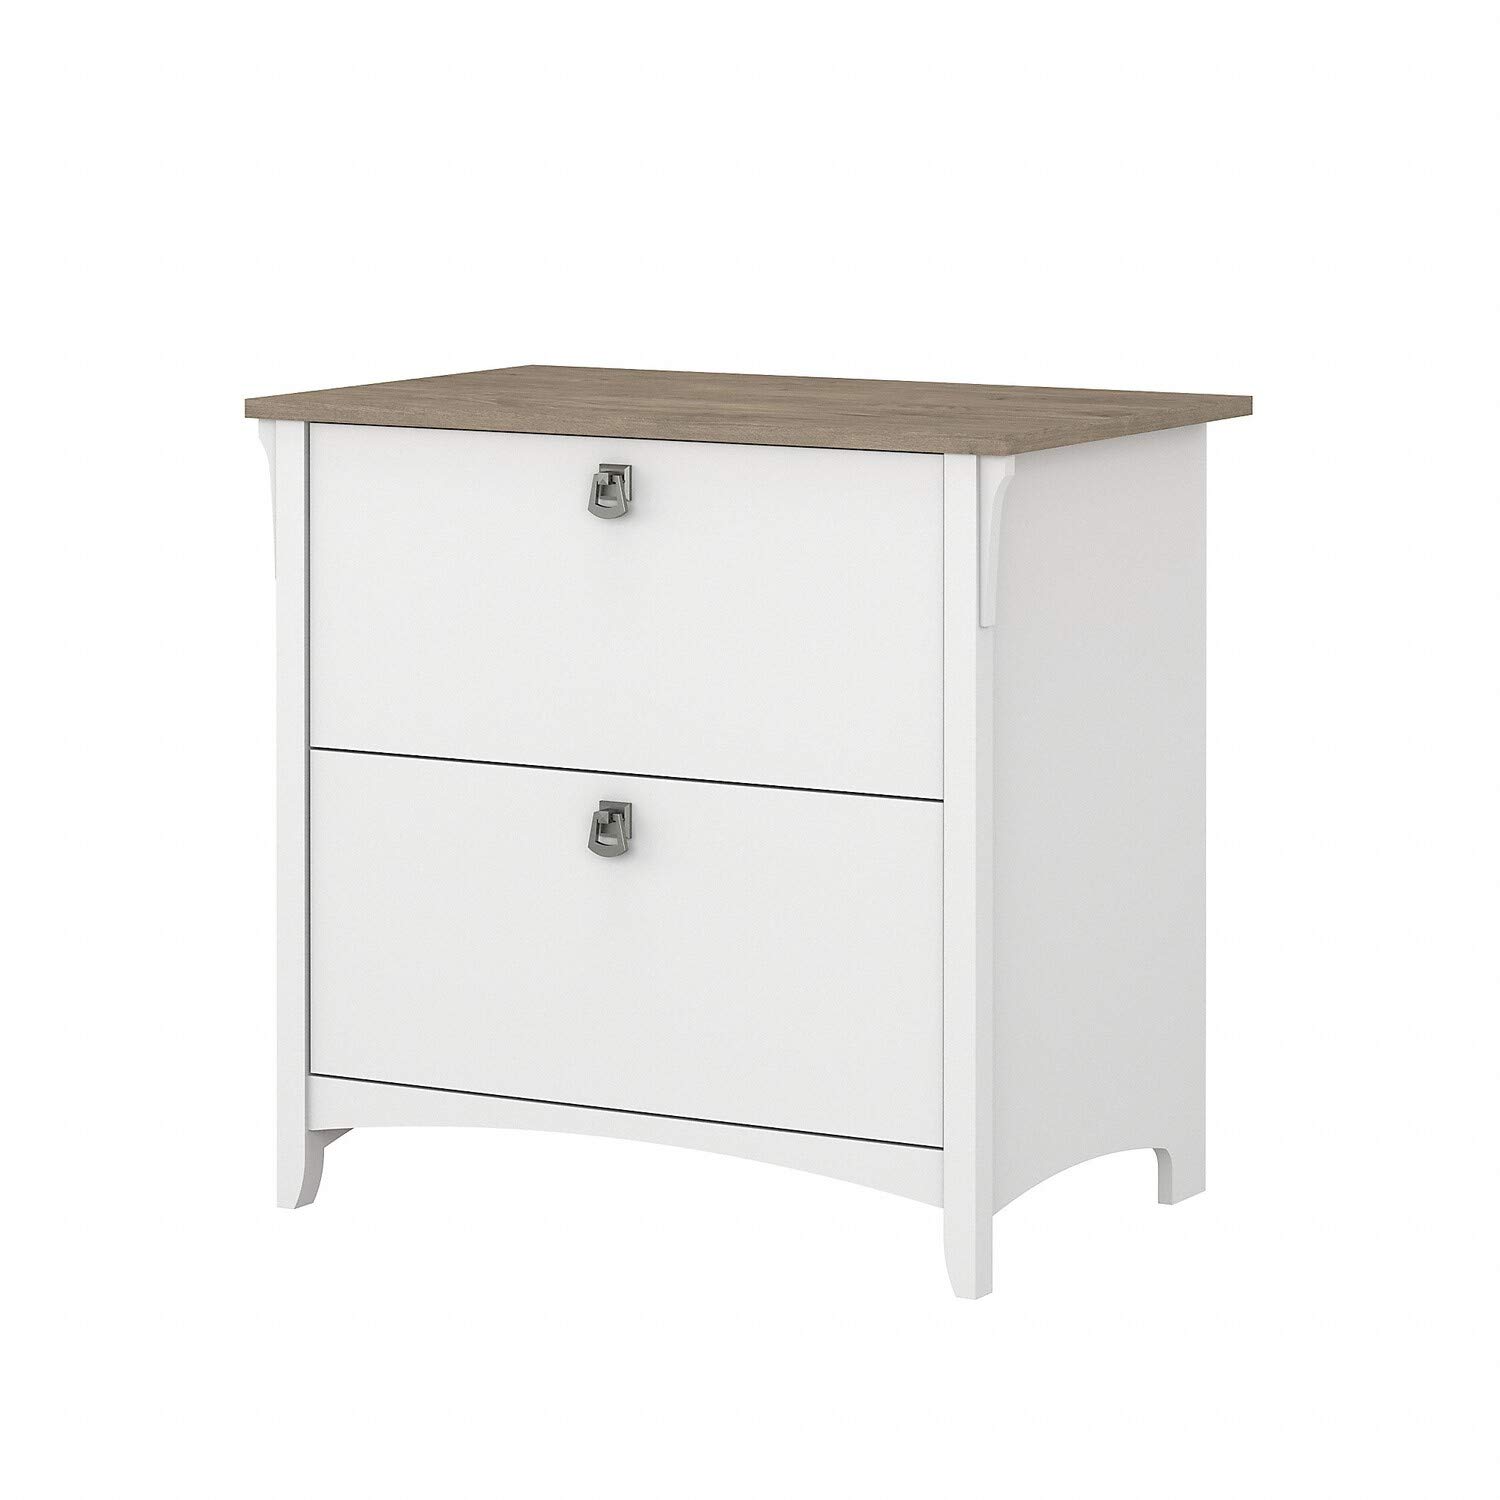 Bush Furniture Salinas 2 抽屉横向文件柜，纯白色和搭叠灰色